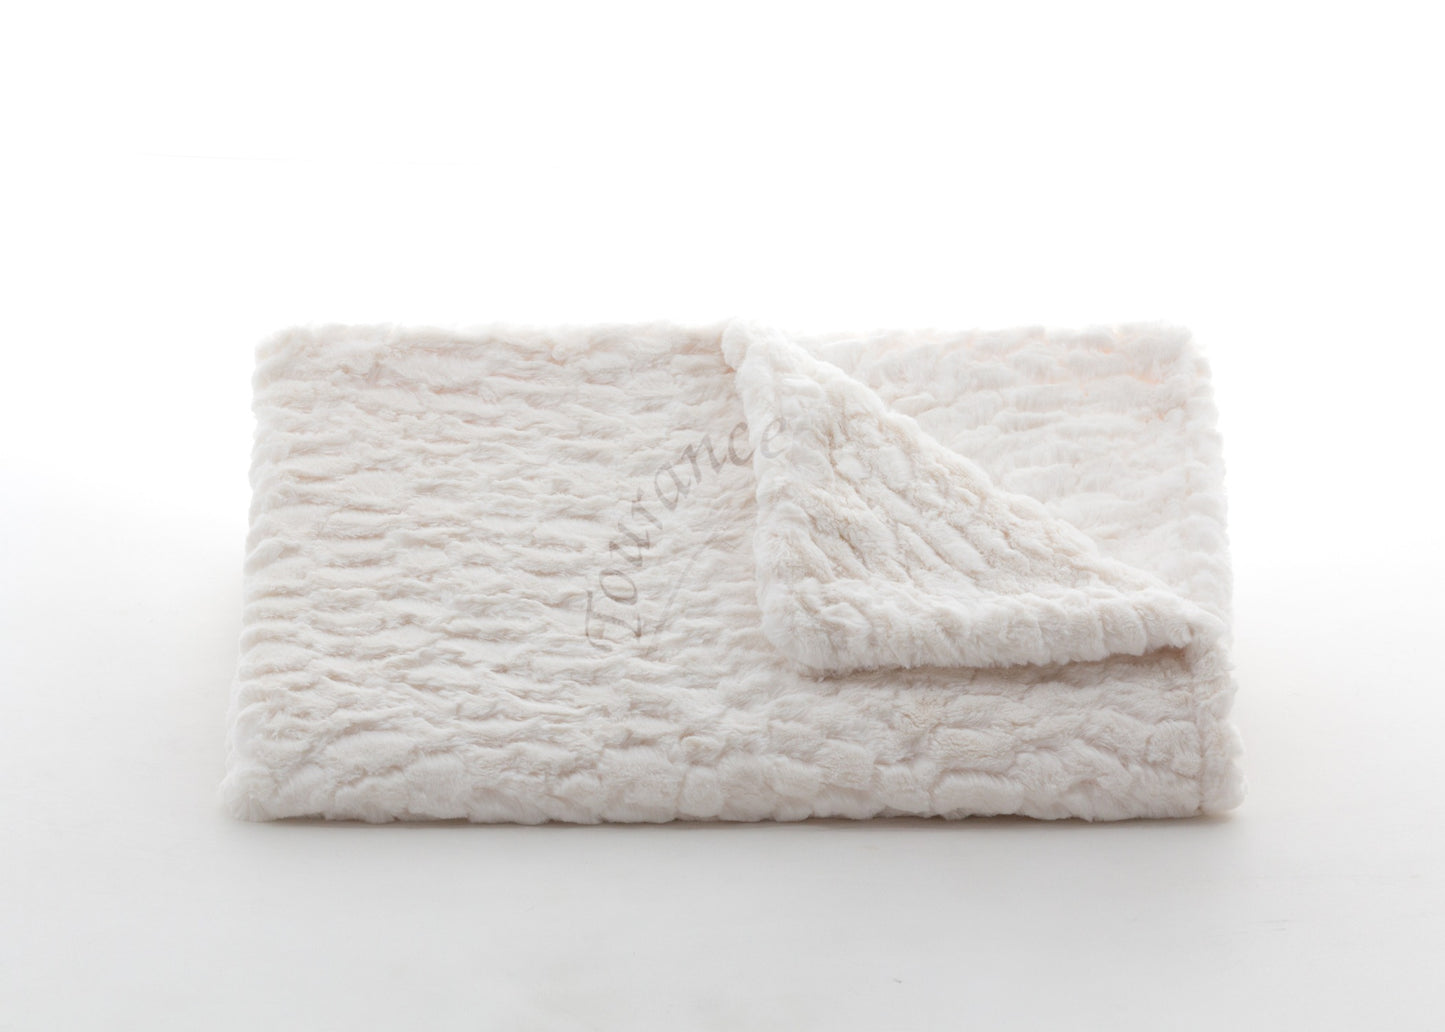 RosebudDuotone Baby Blanket in Cream & Sahara with watermark